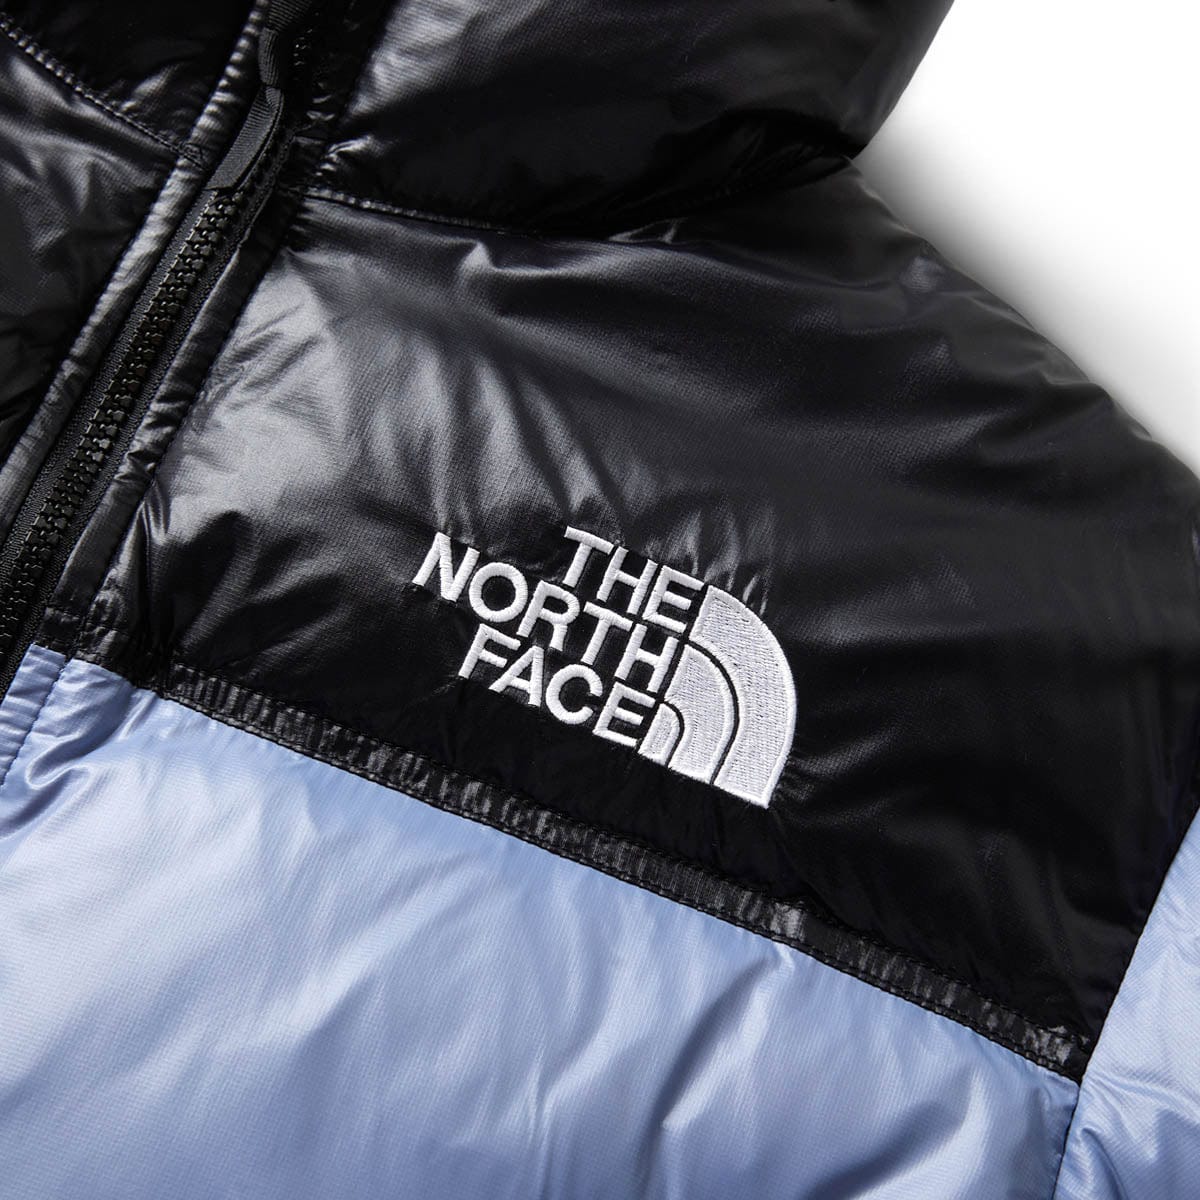 The North Face Women's Nuptse Short Jacket